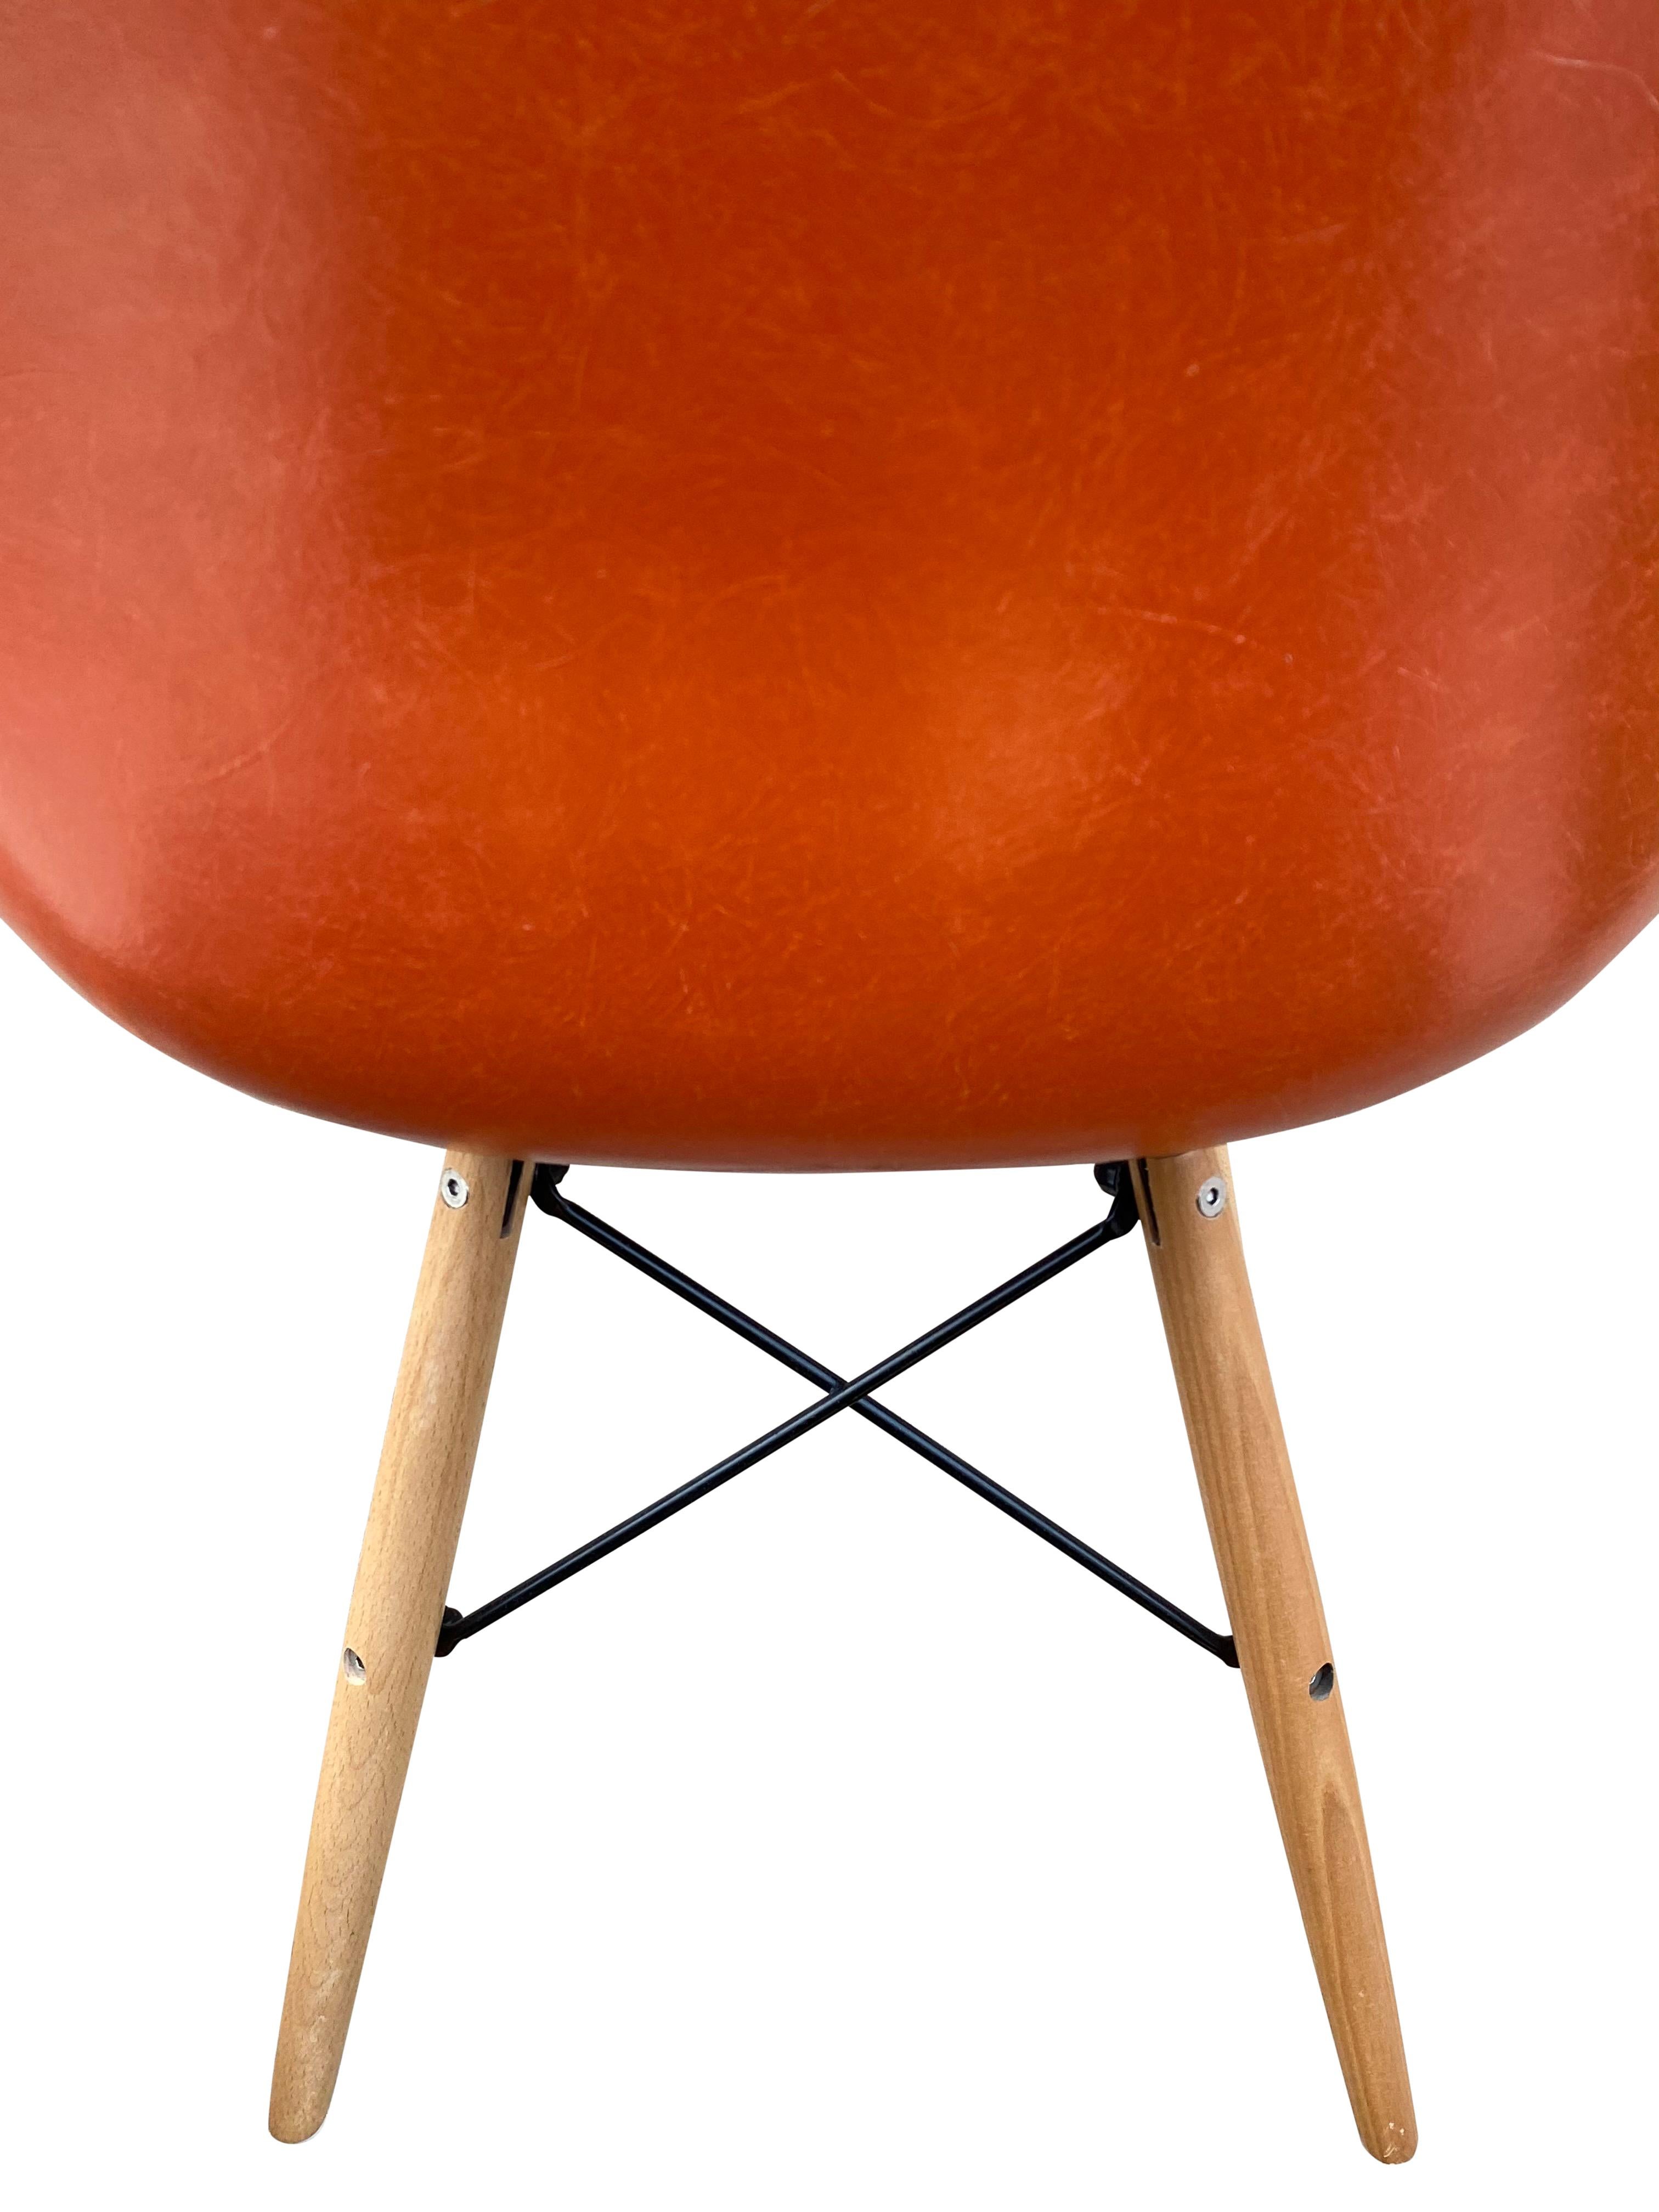 Fiberglass Multicolored Herman Miller Eames Dining Chair Set